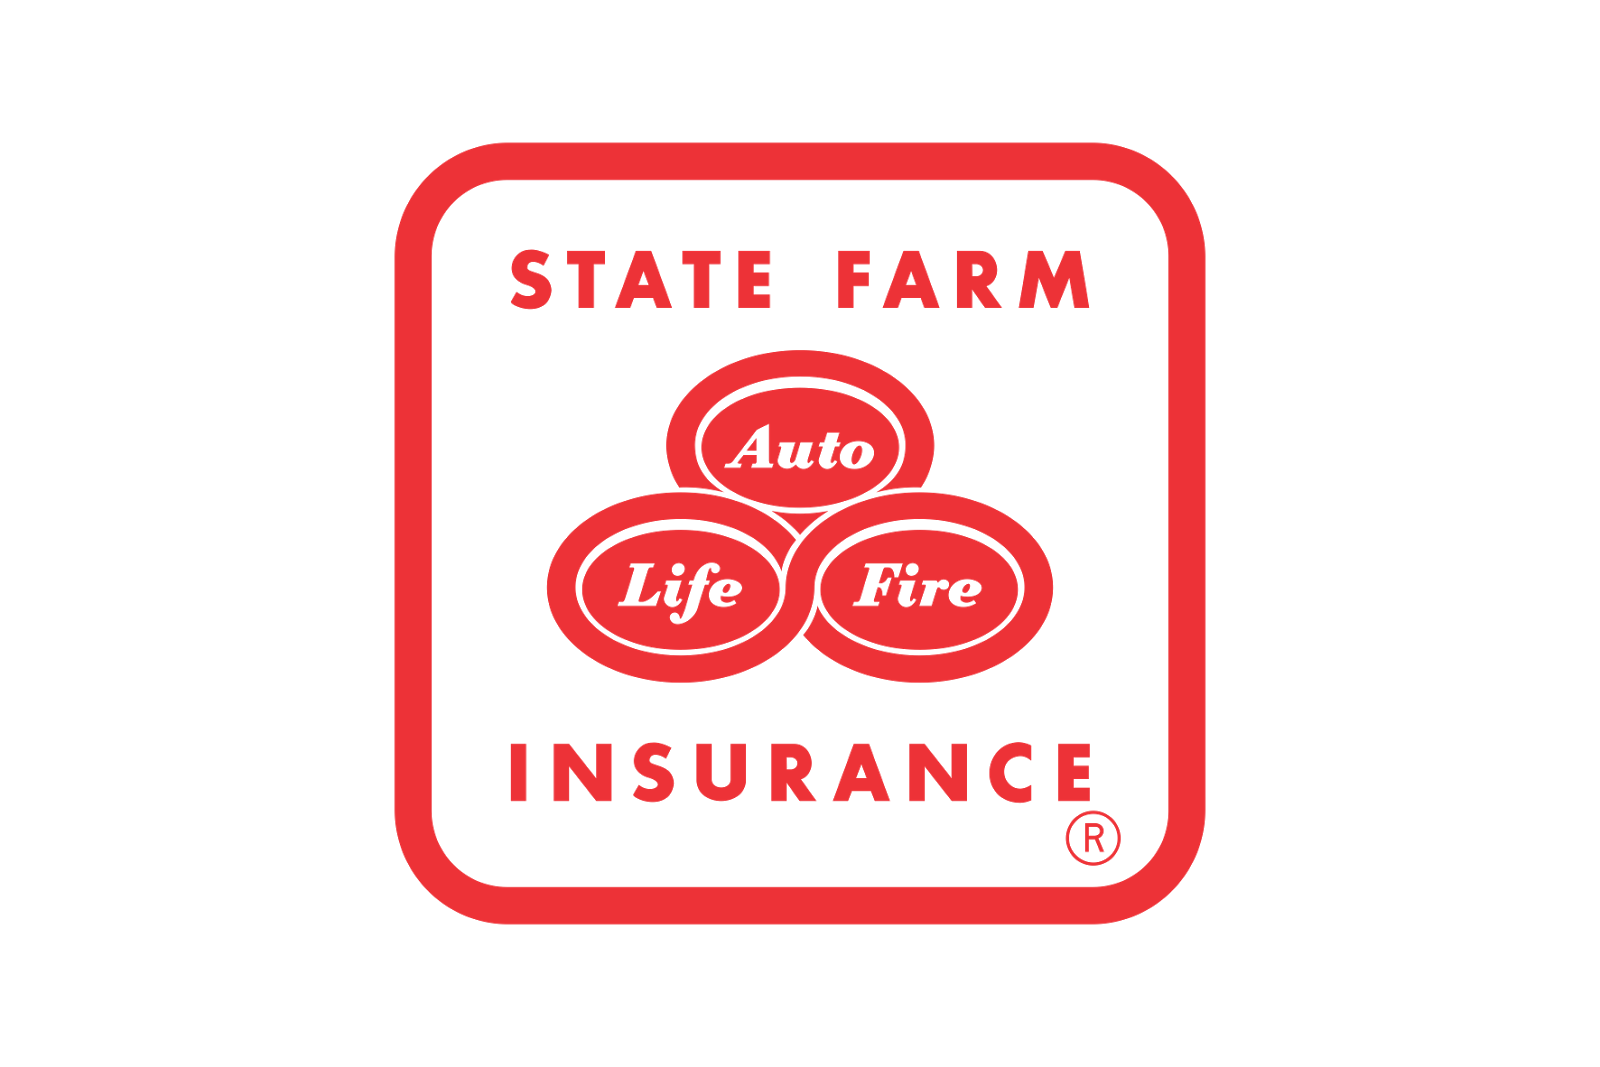 State farm insurance